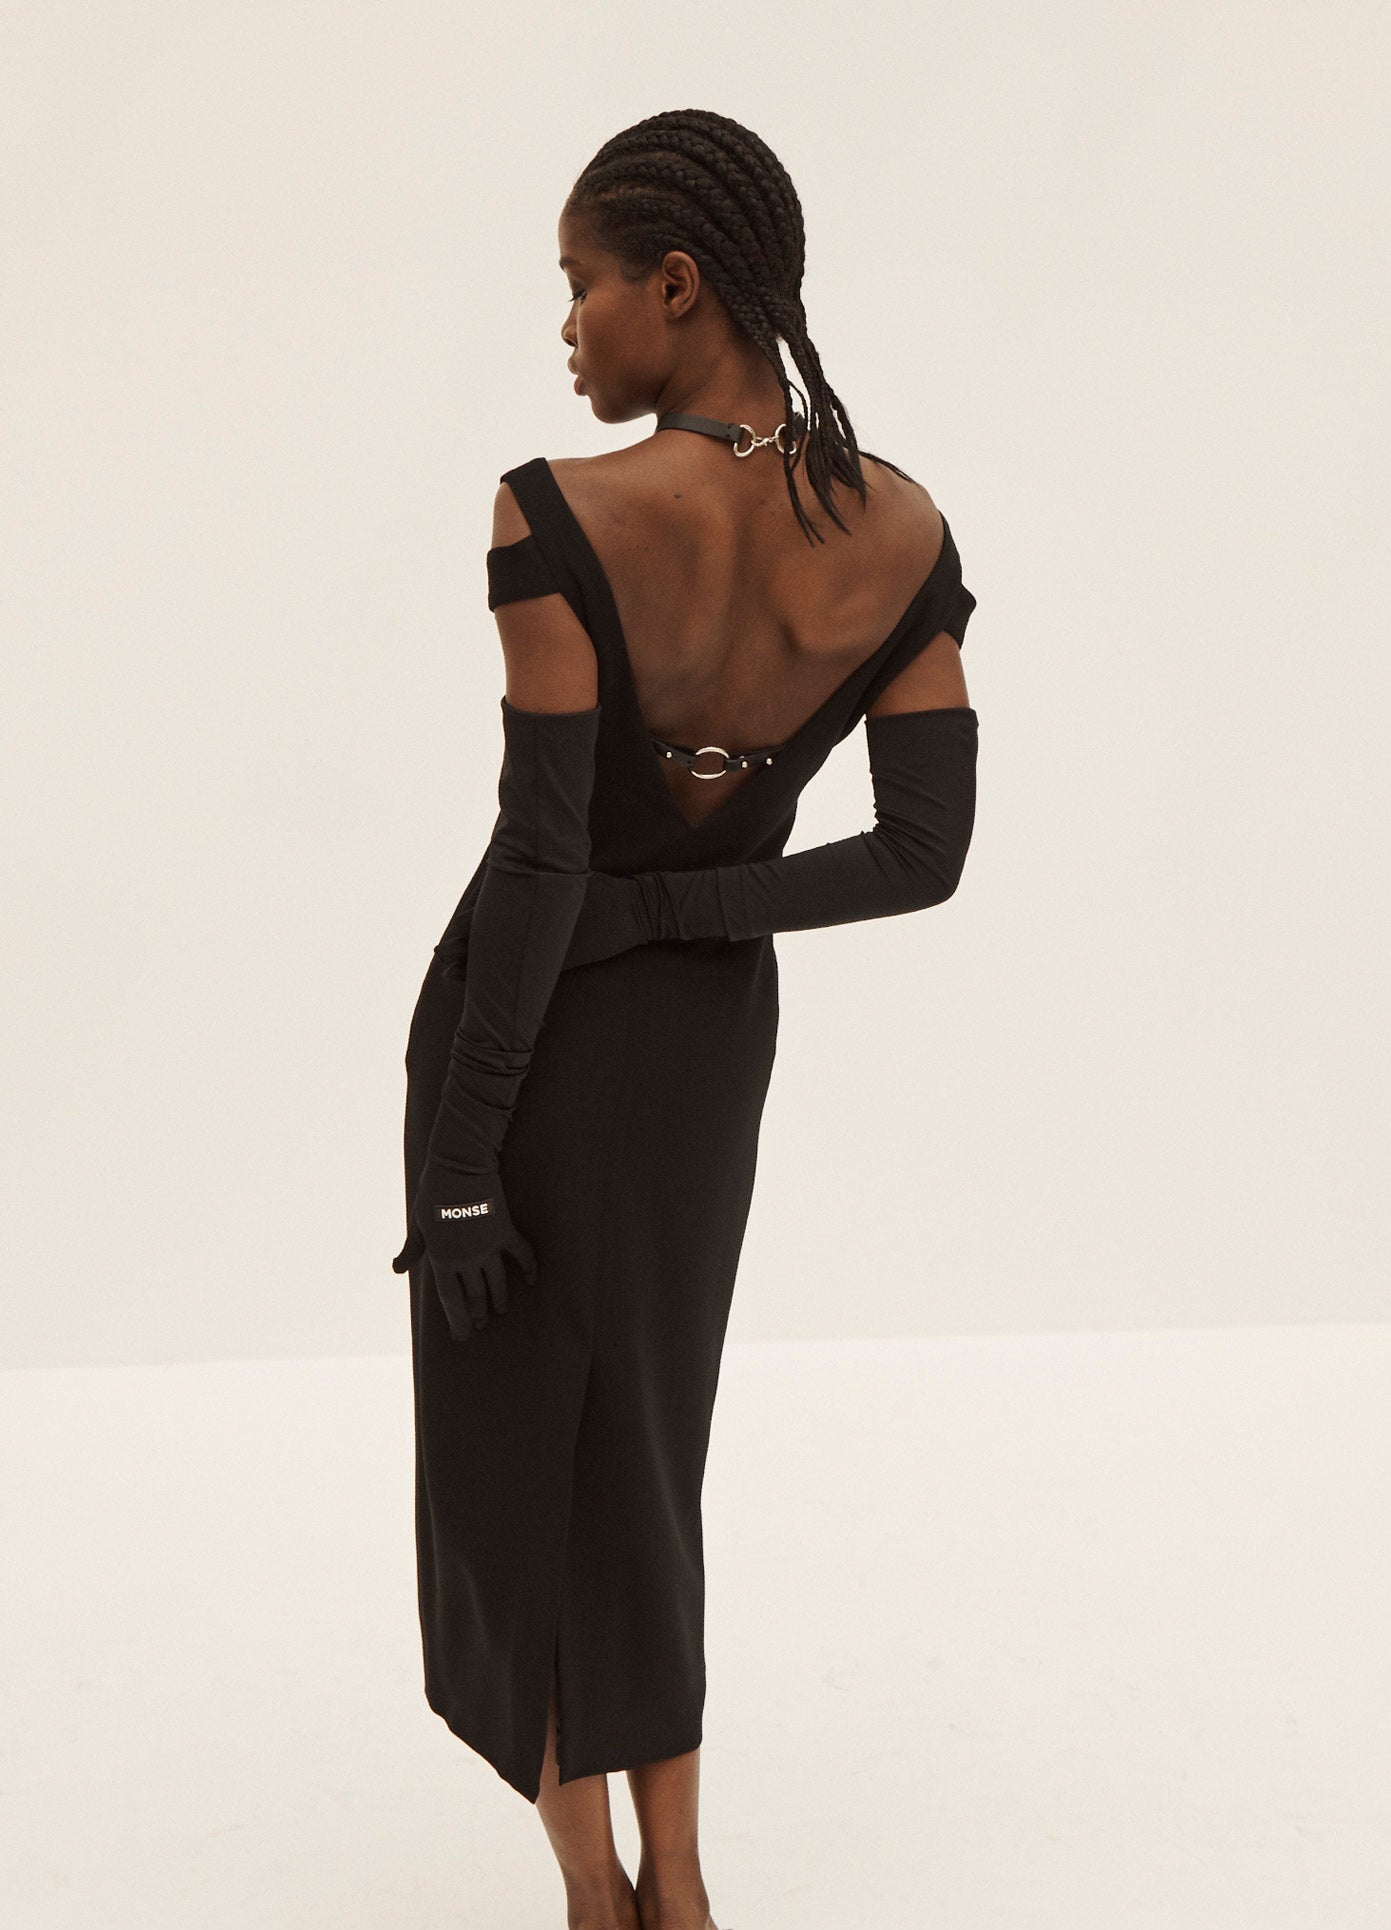 MONSE Harness Dress in Black on Model Back View